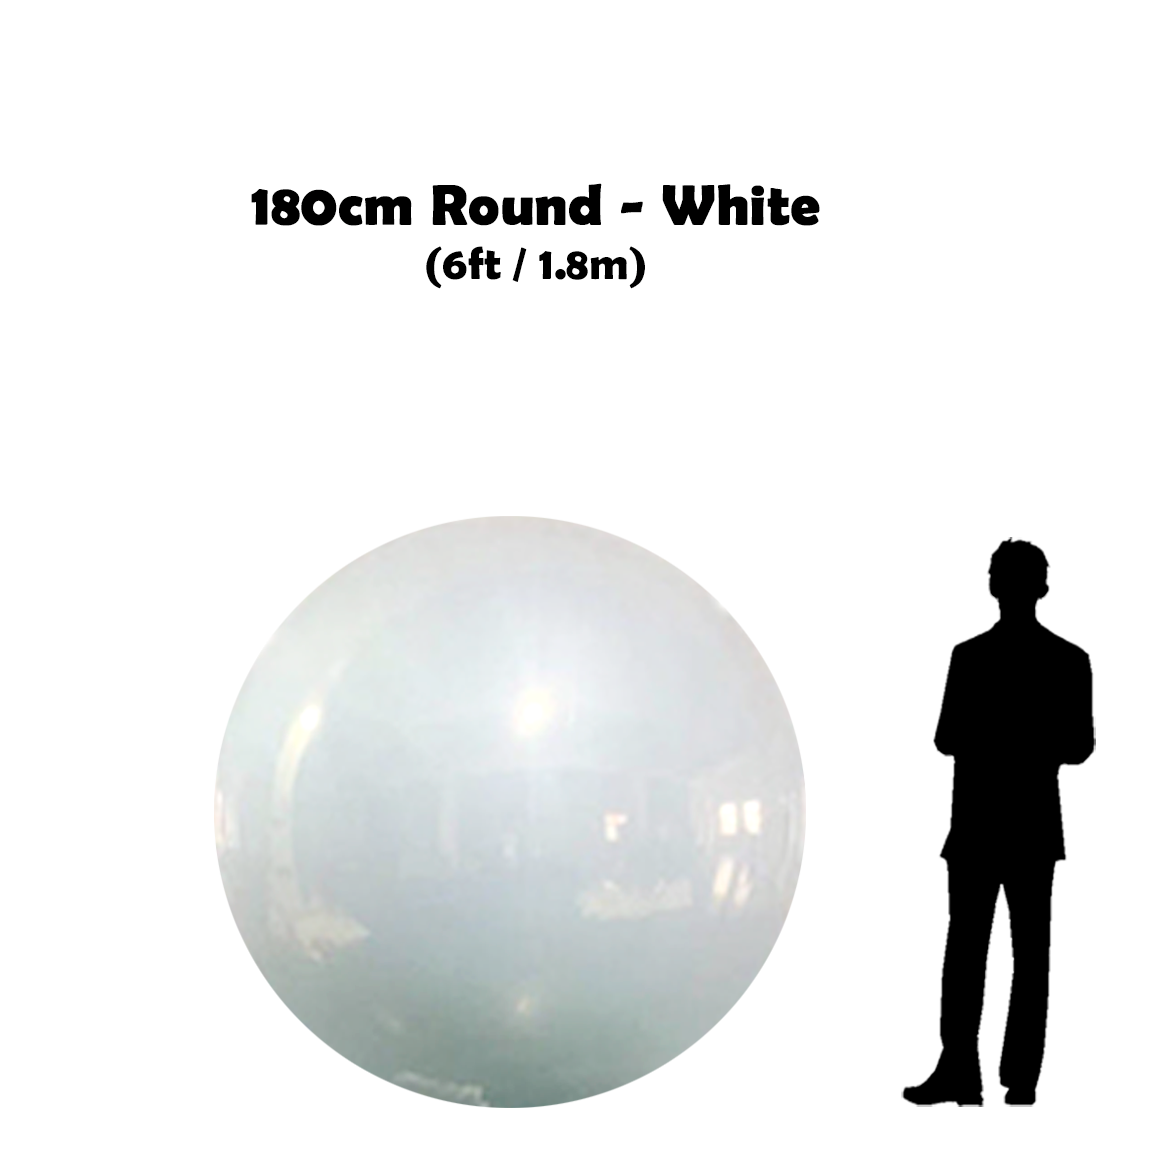 180 cm Big White ball beside 5'10 guy silhouette 